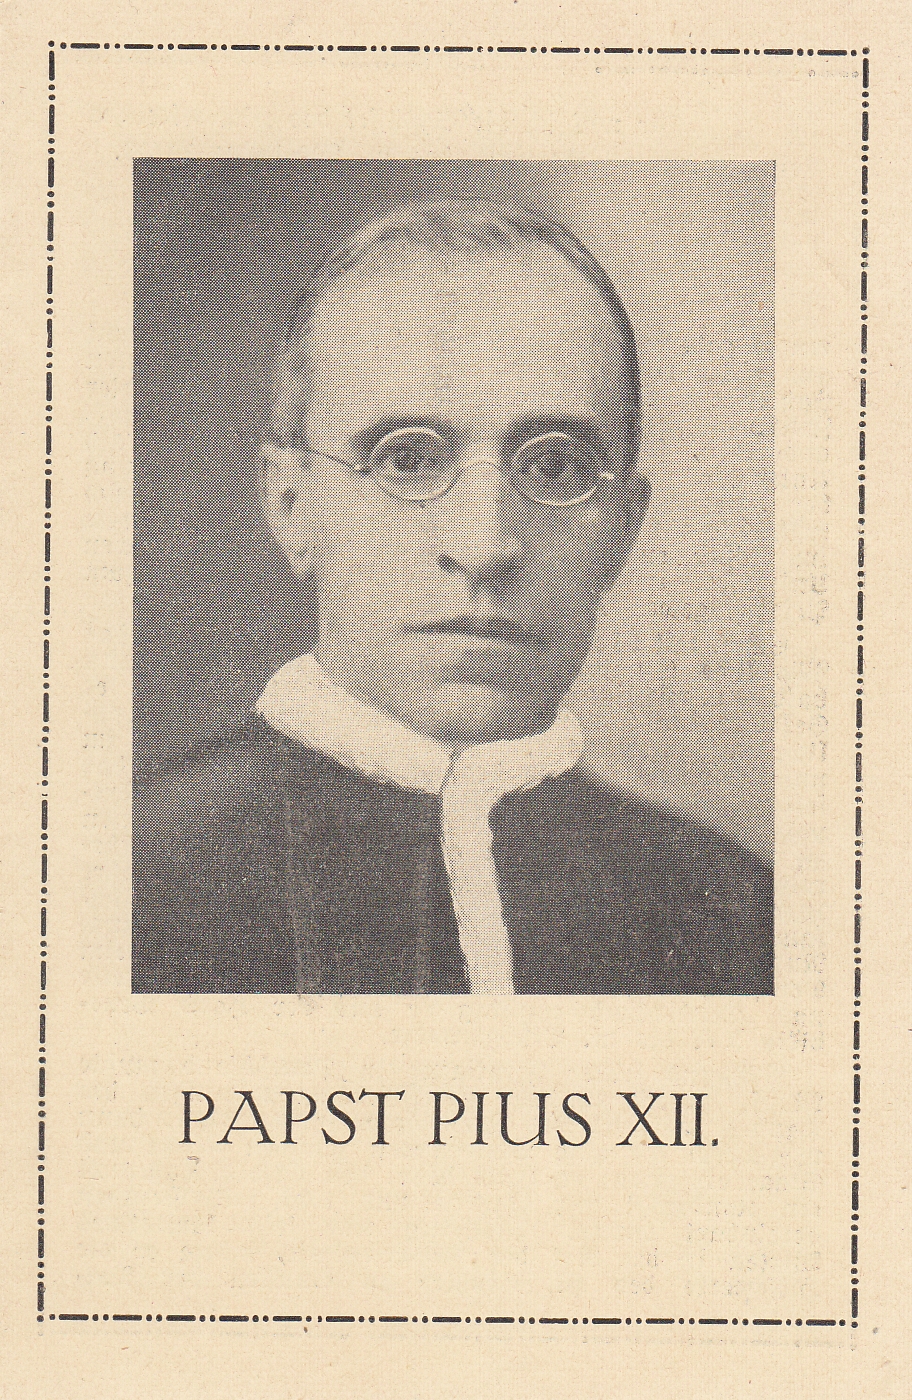 AGPV-5 Pius XII Dr